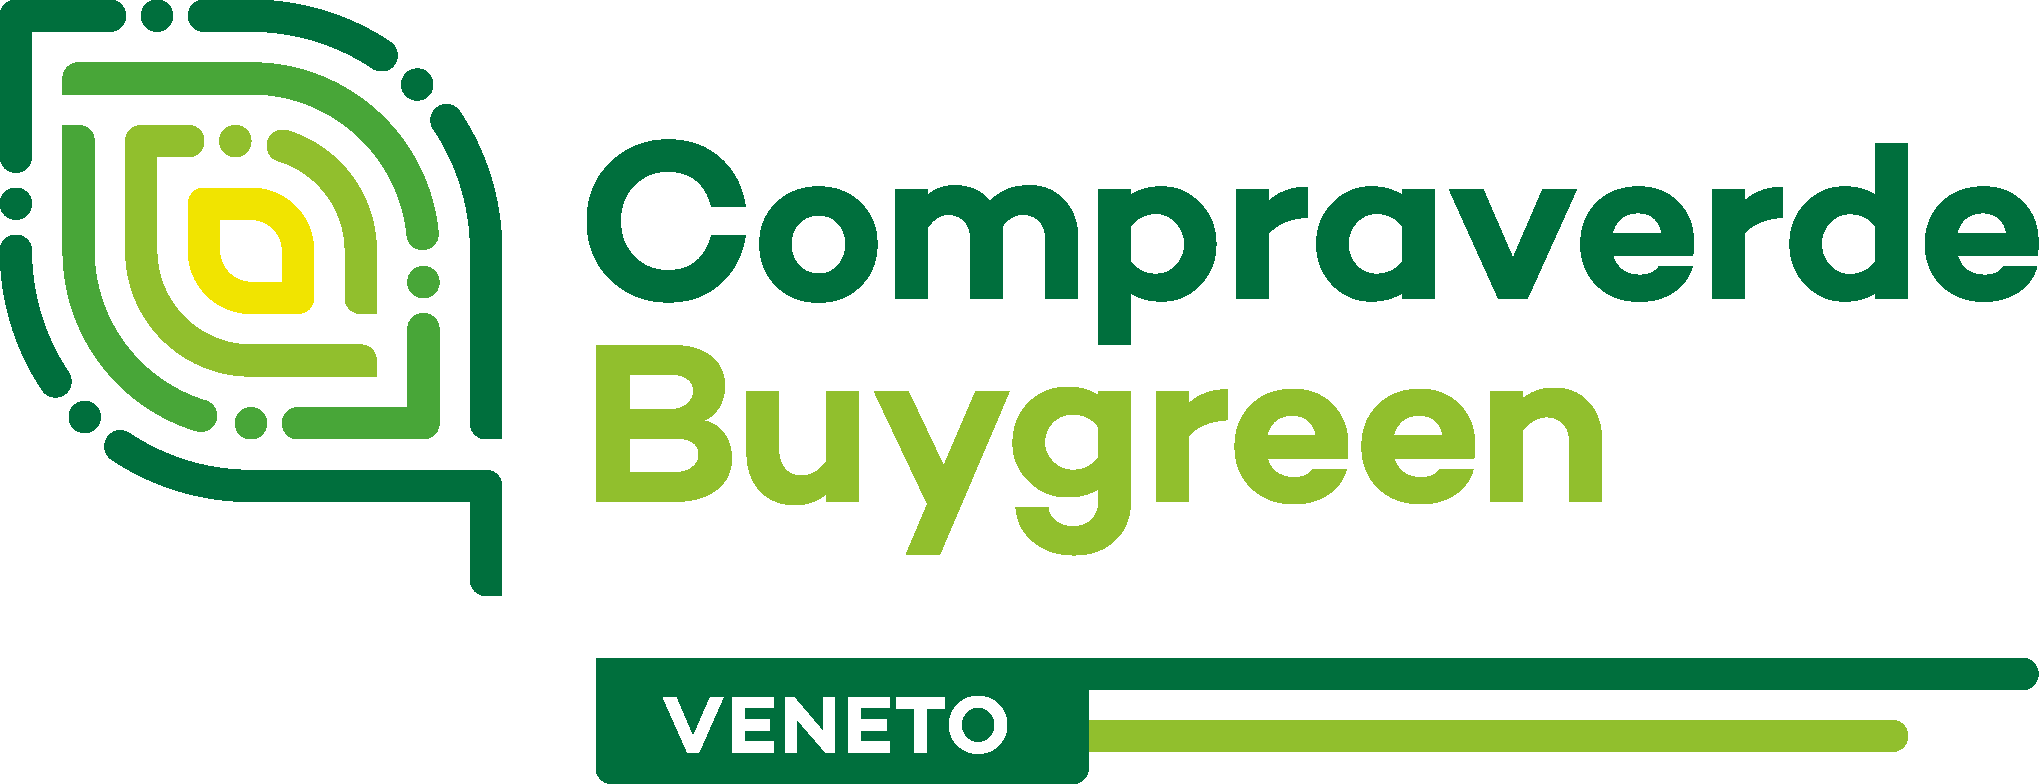 Forum Compraverde Buygreen Veneto